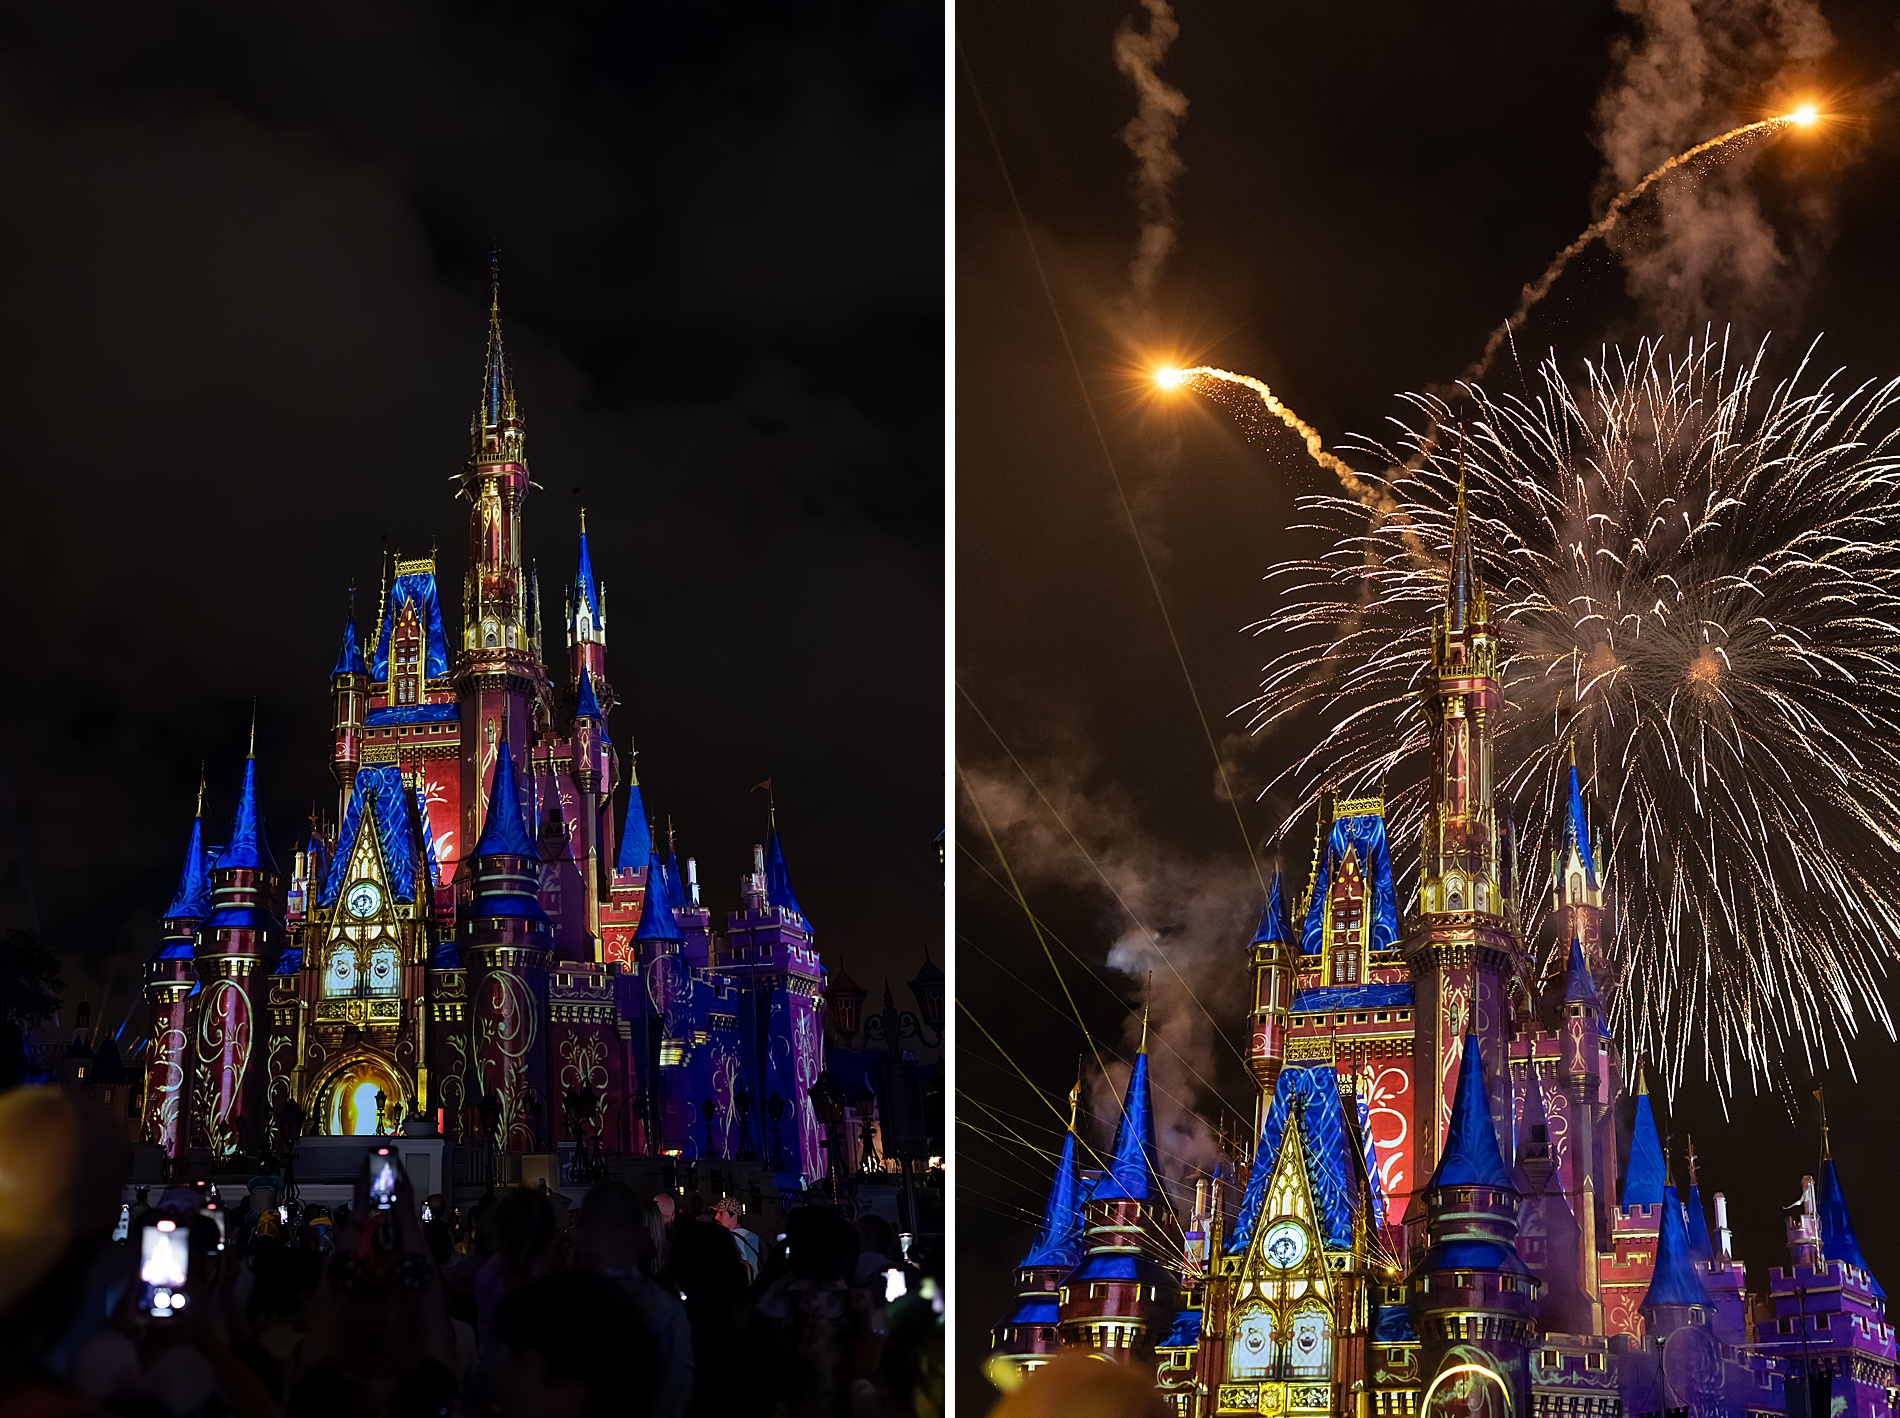 Amazing firework display at Disney castle